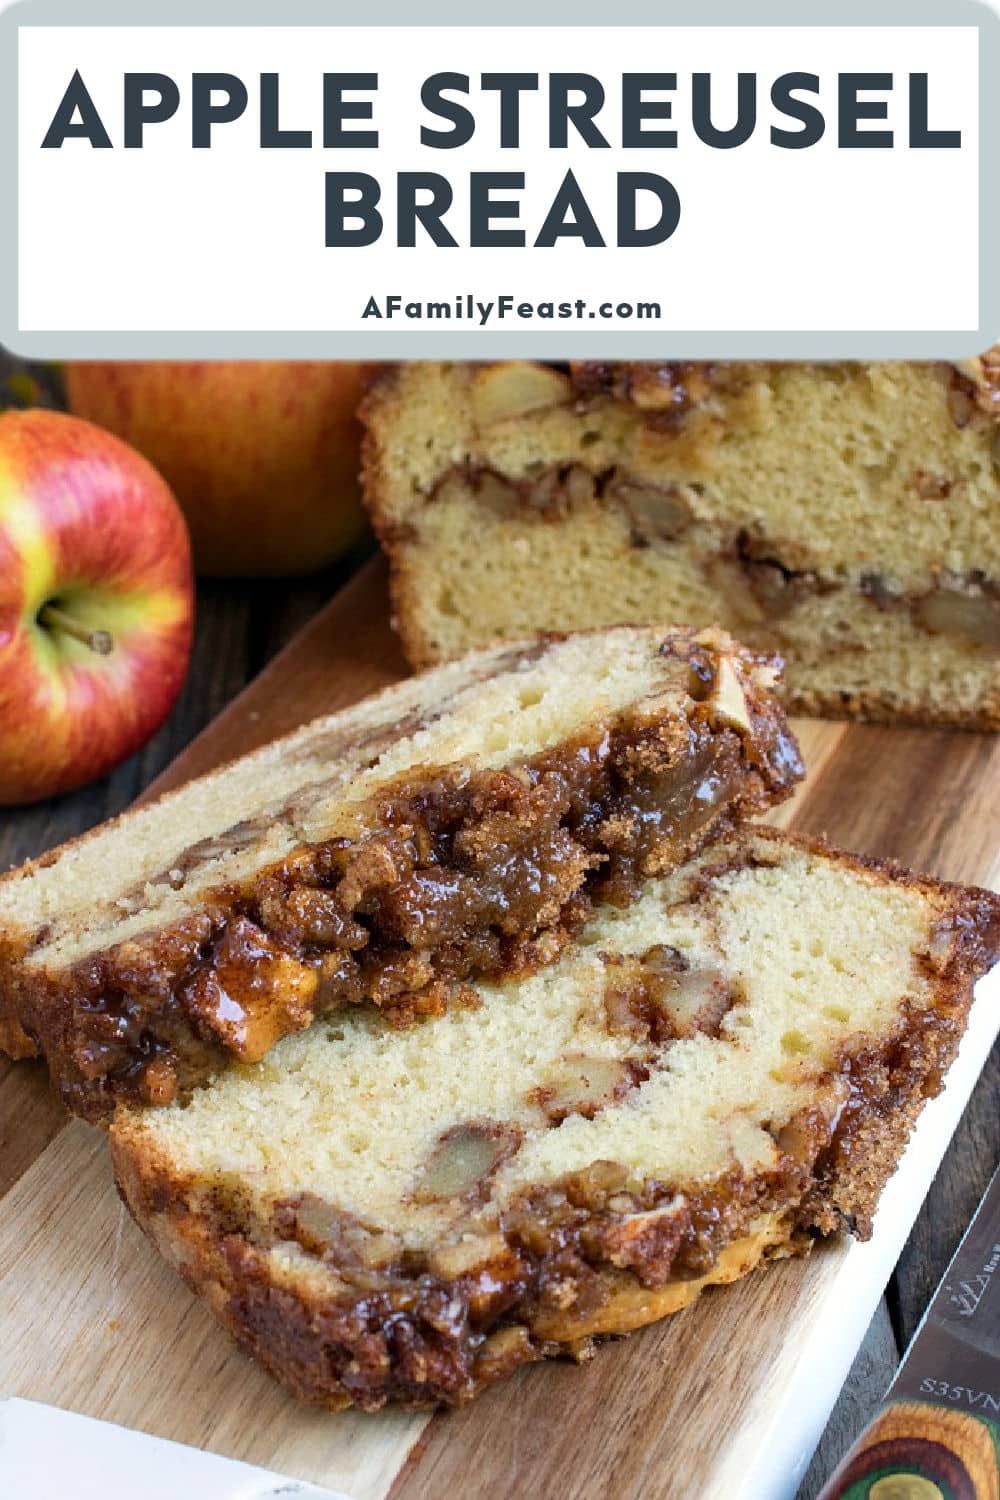 Apple Streusel Bread - A Family Feast